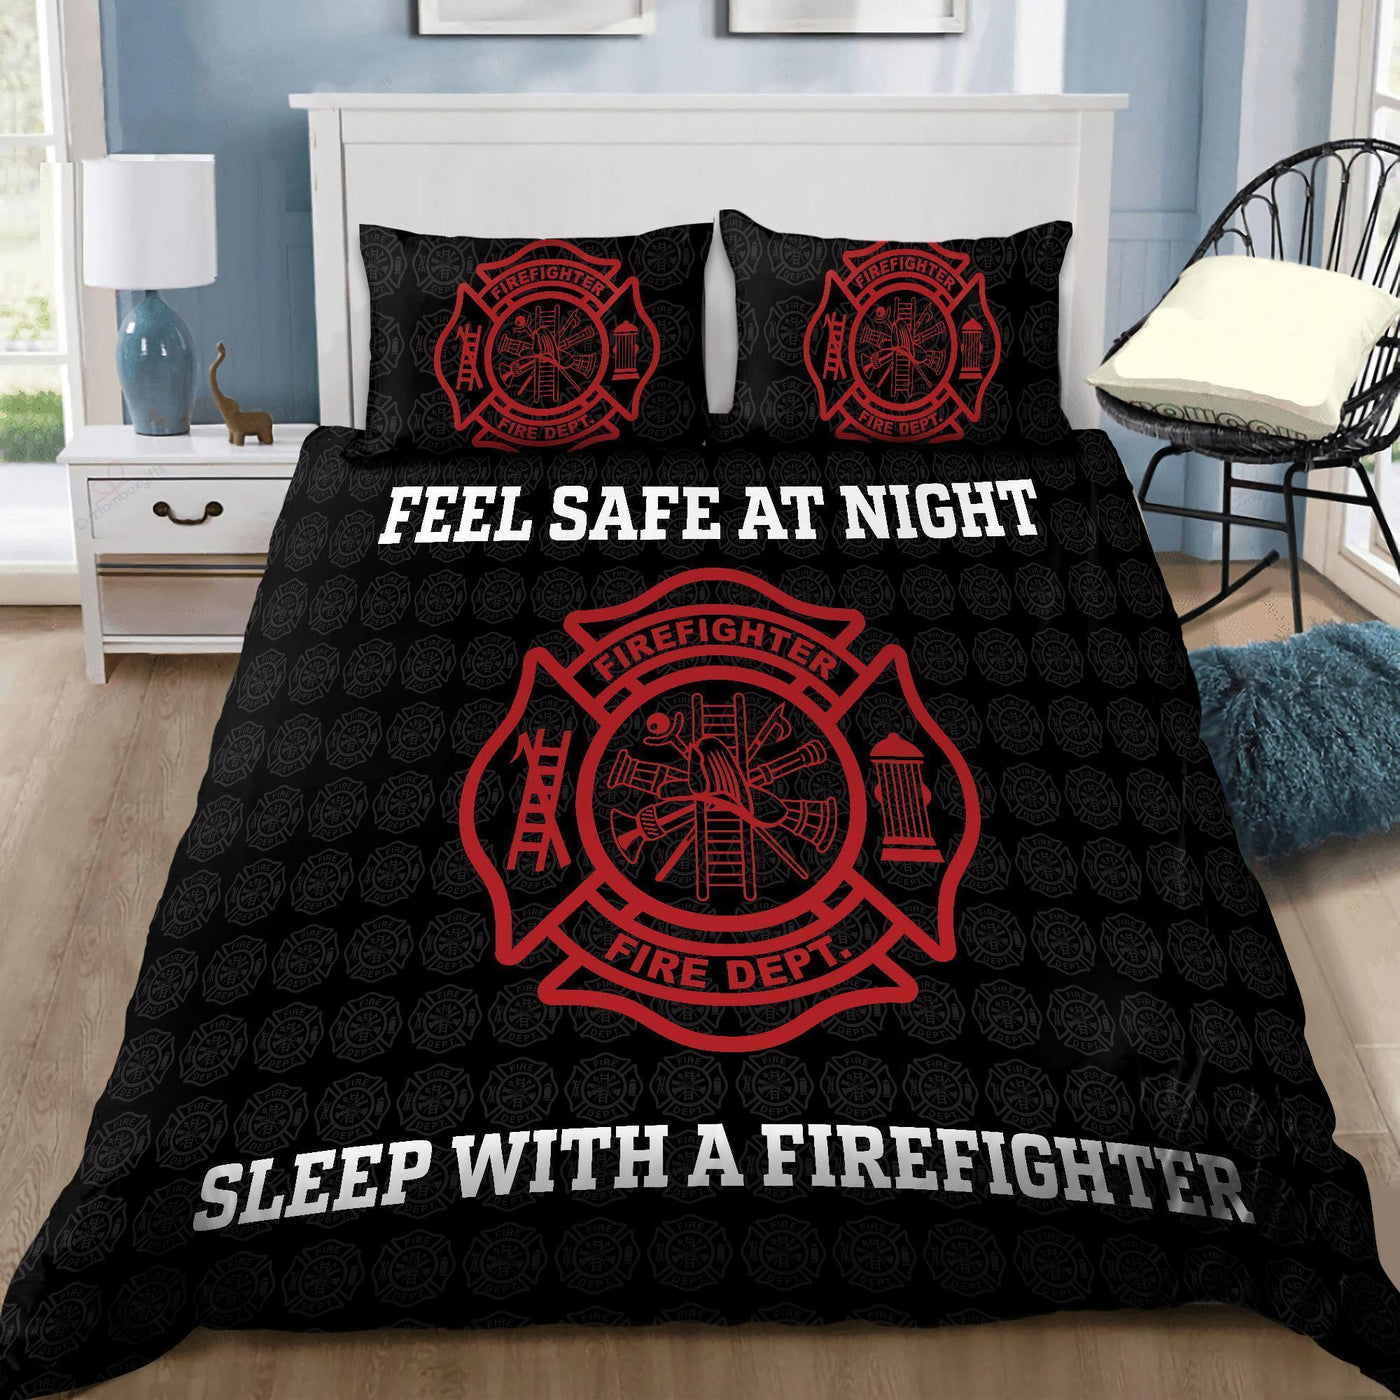 Firefighter Feeling Safe With Firefighter - Bedding Cover - Owls Matrix LTD